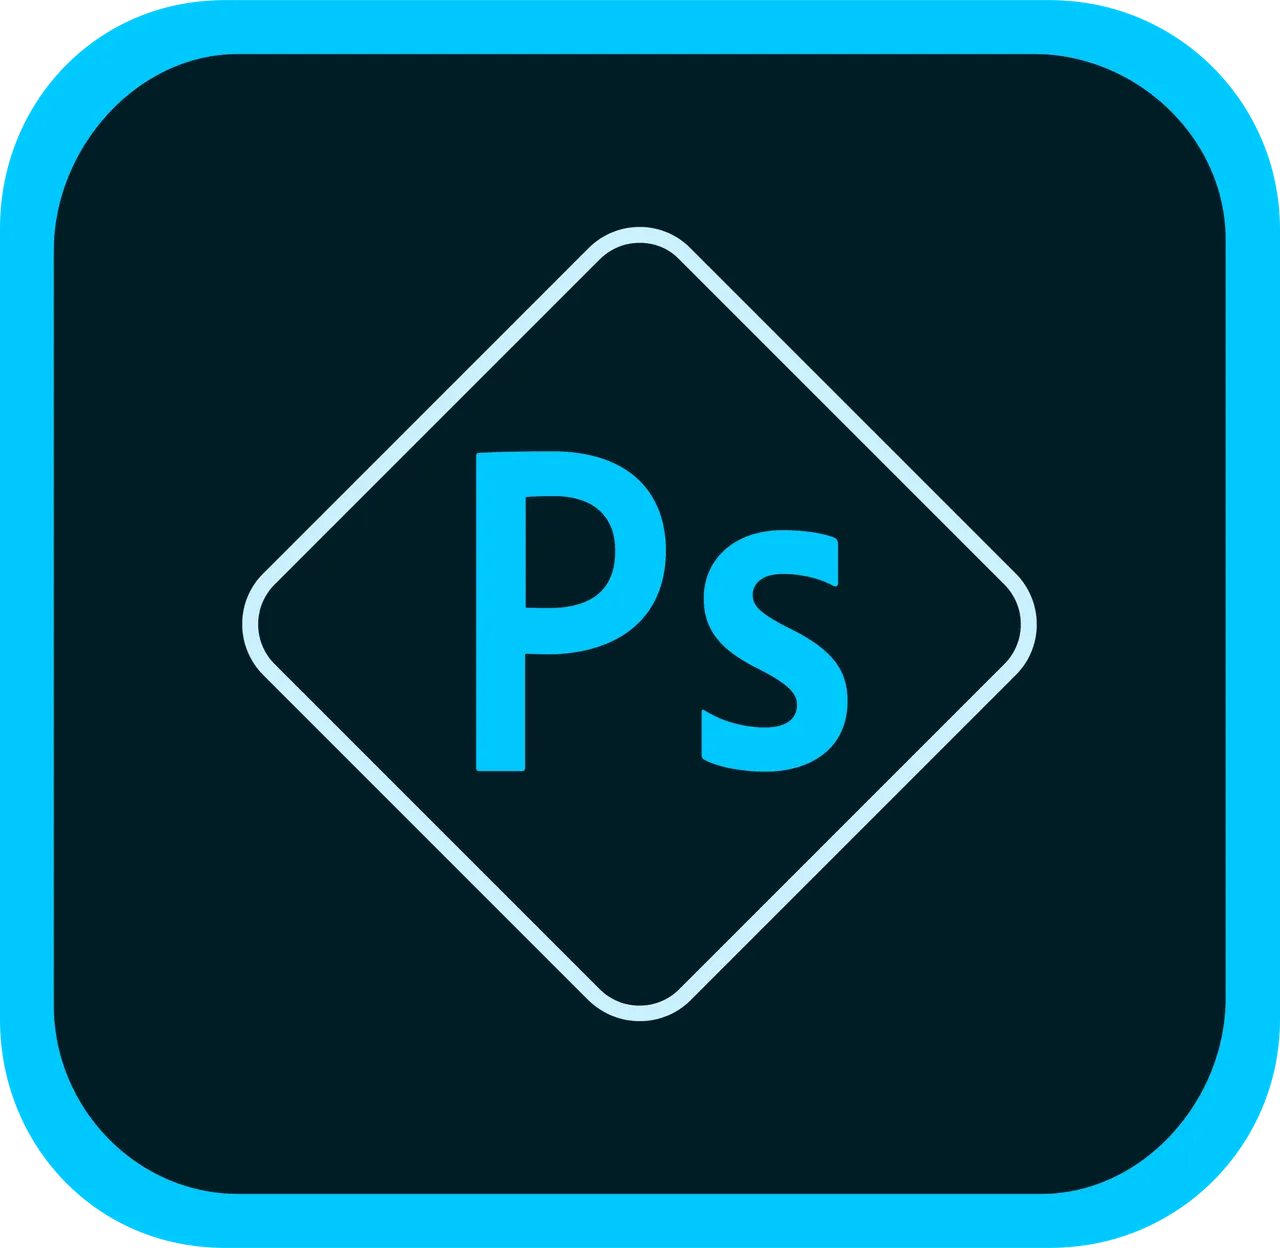 Adobe_Photoshop_Express_logo.svg.png